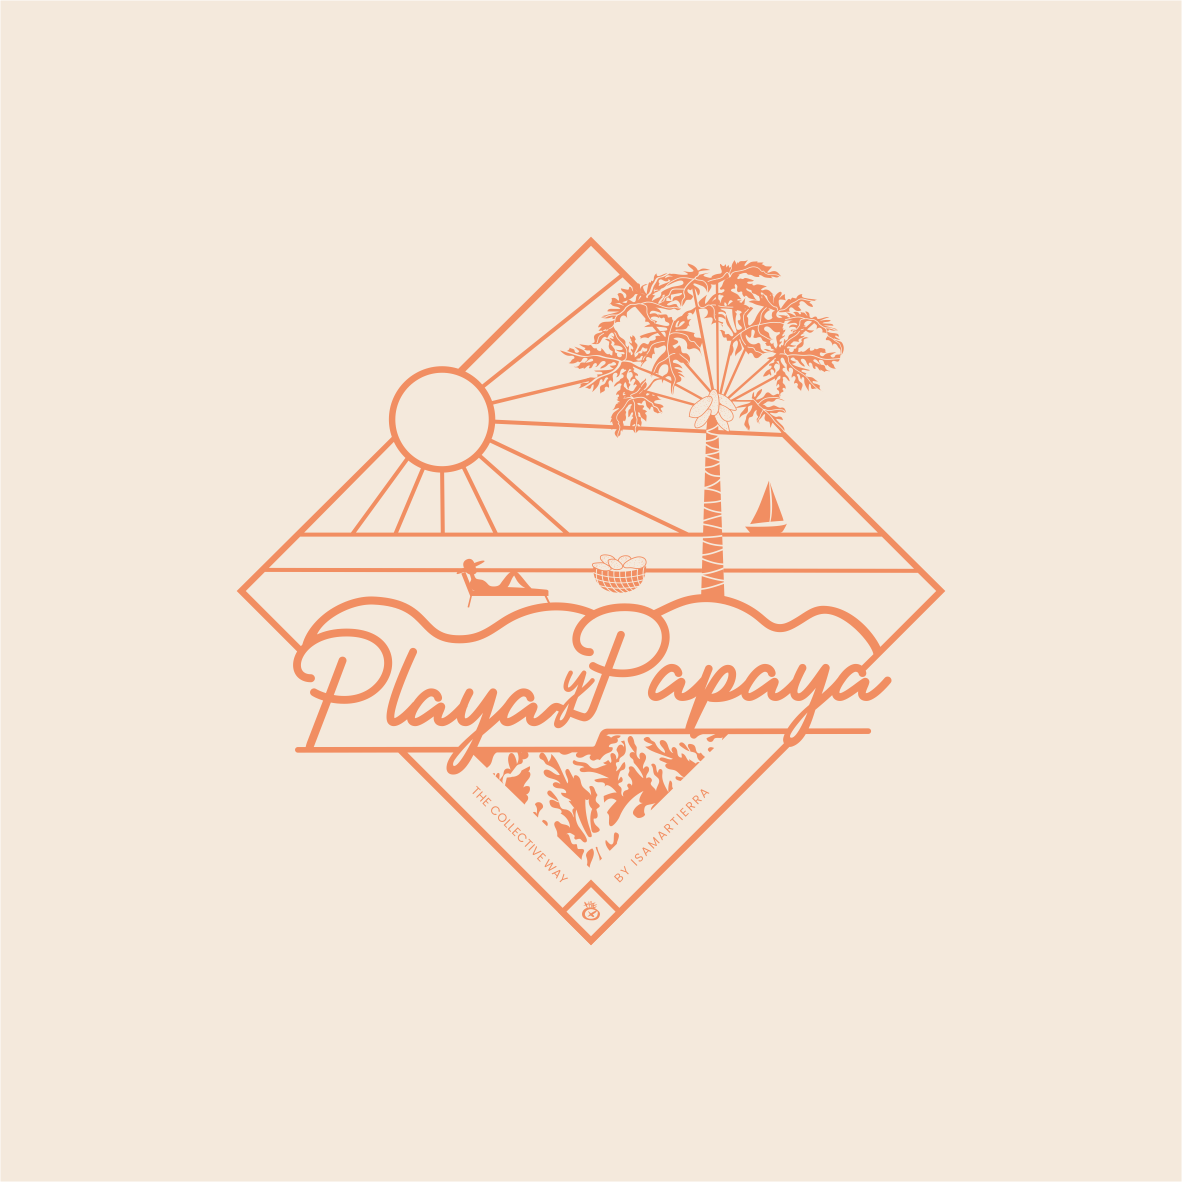 Playa Papaya